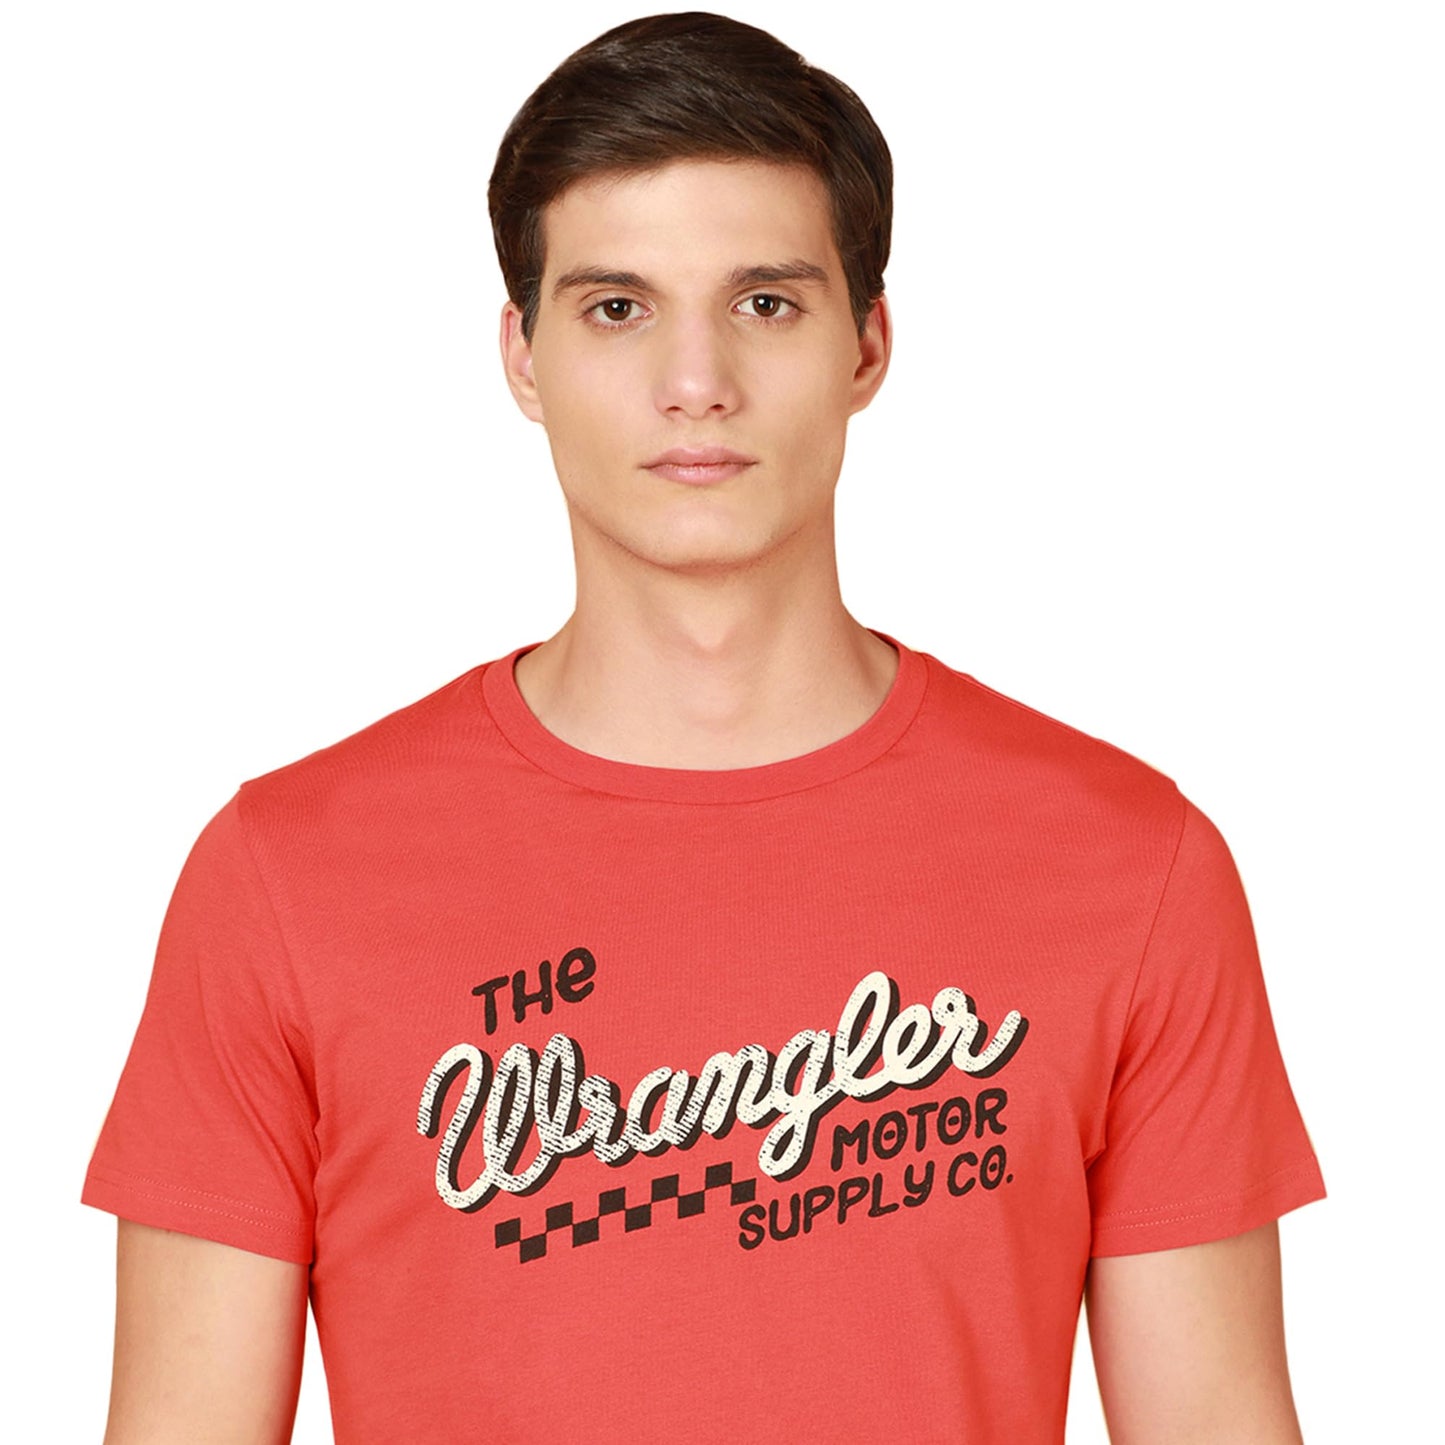 Wrangler Men's Solid Regular Fit Shirt (WMTS007136_Red